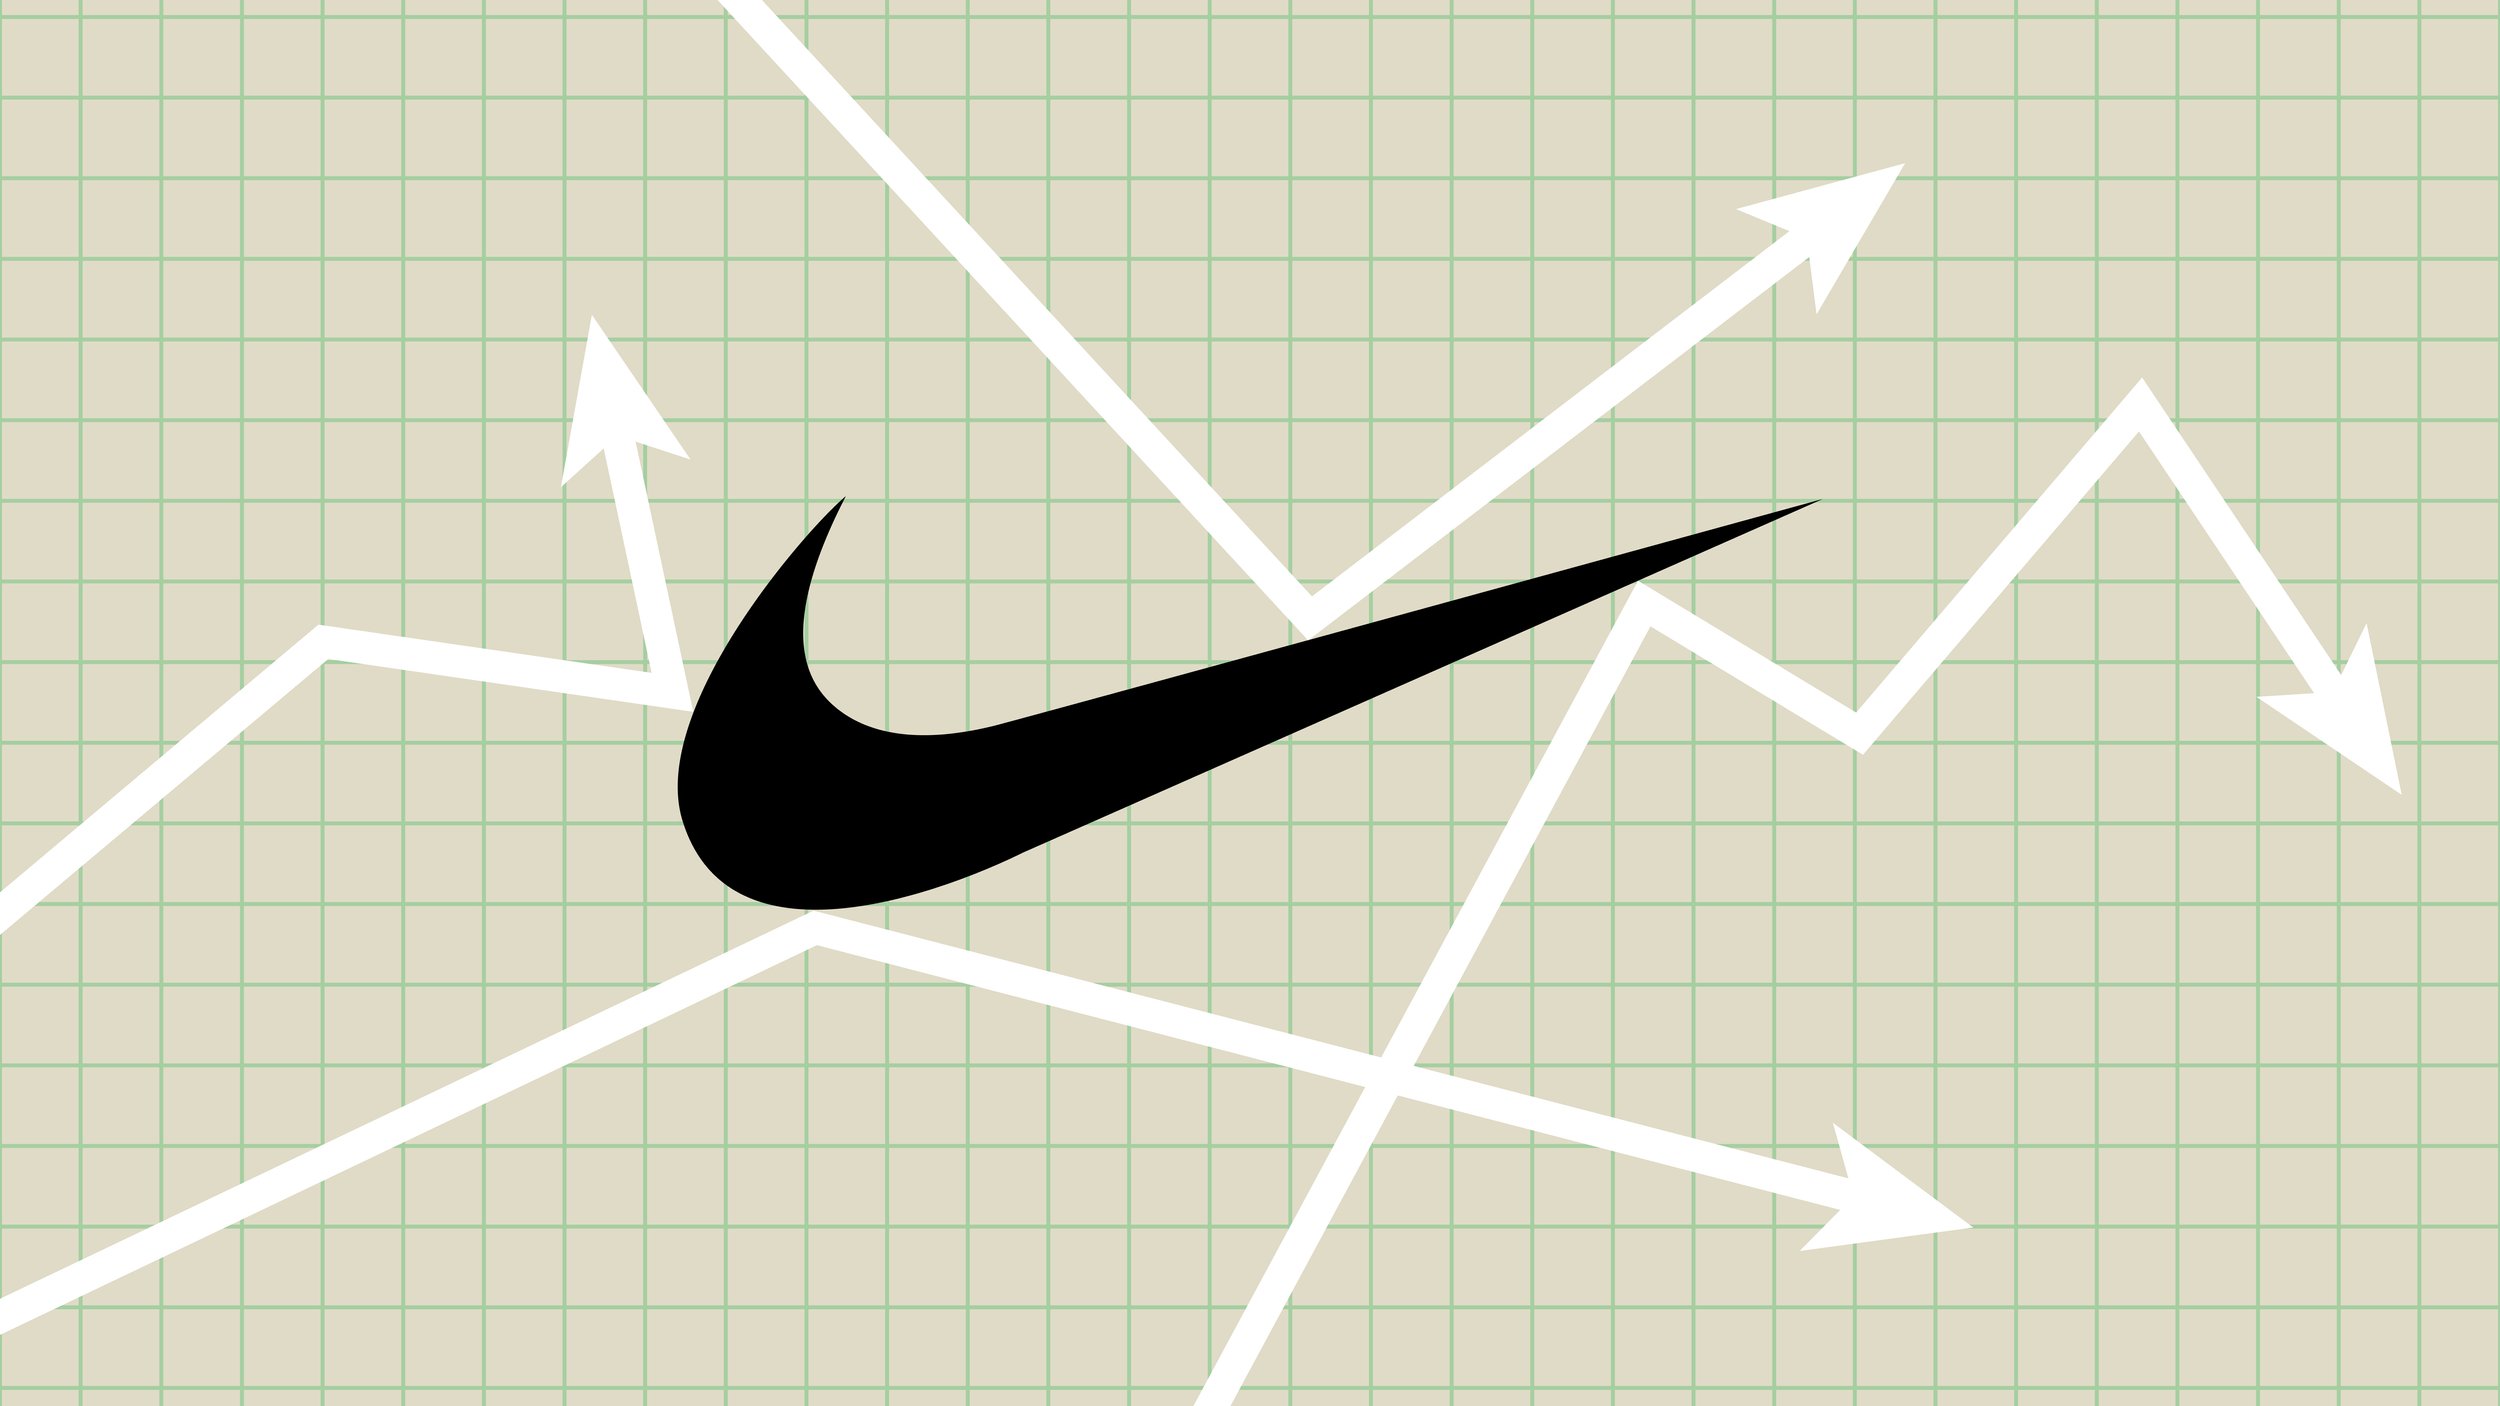 Razernij bescherming flexibel How Long Does it Take for Nike Stock Downturns to Recover? — Human Investing